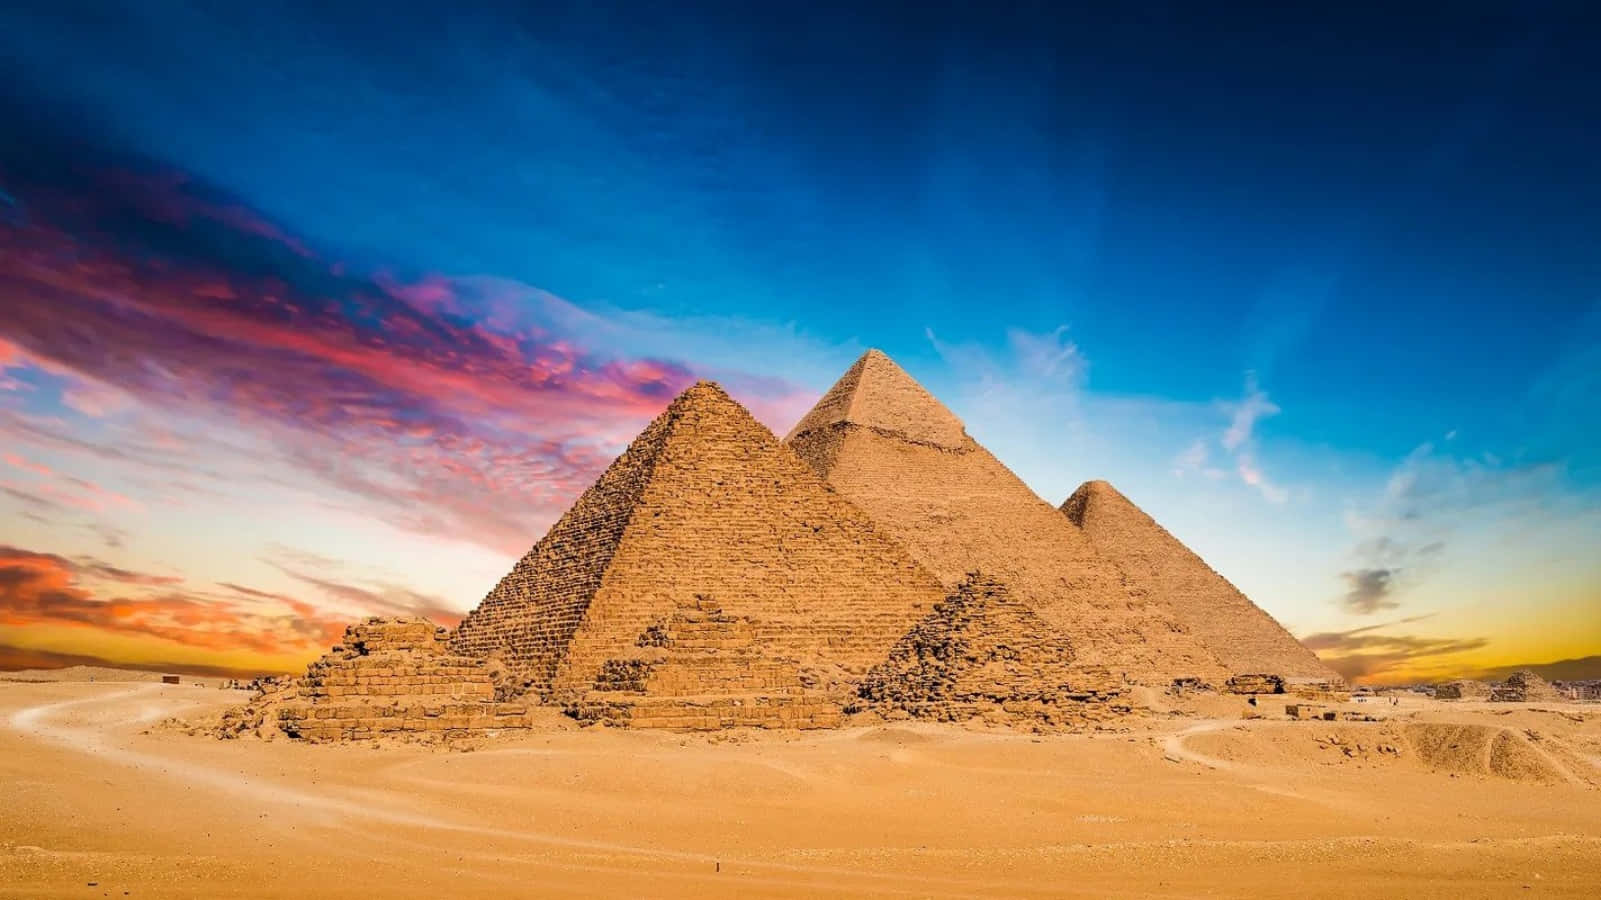 The Pyramids Of Giza At Sunset